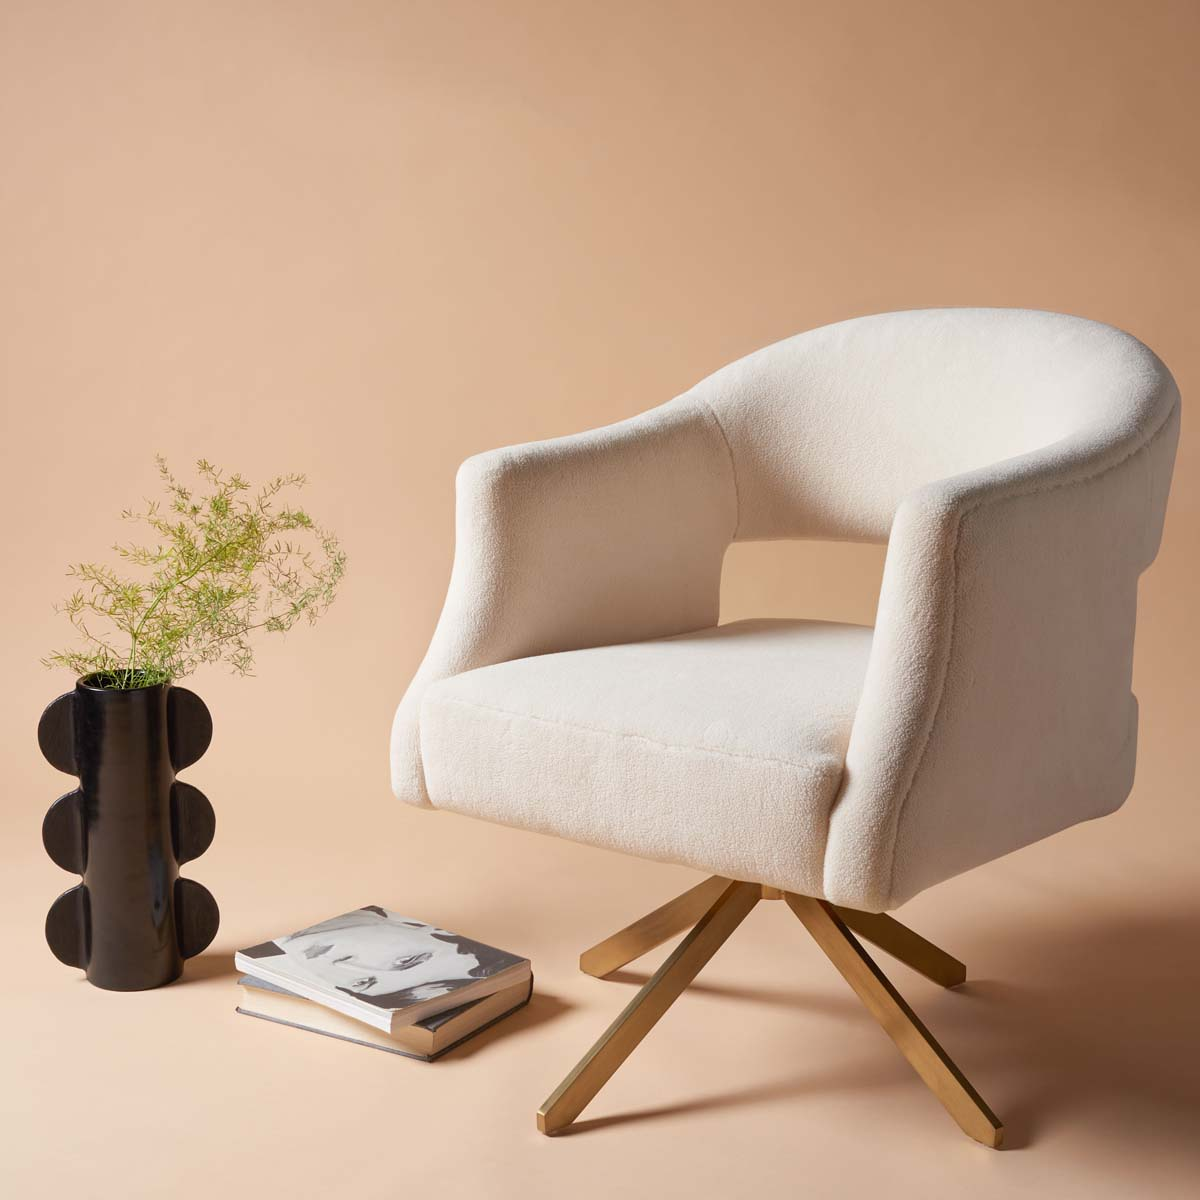 Safavieh Couture Quartz Swivel Accent Chair - Ivory / Gold